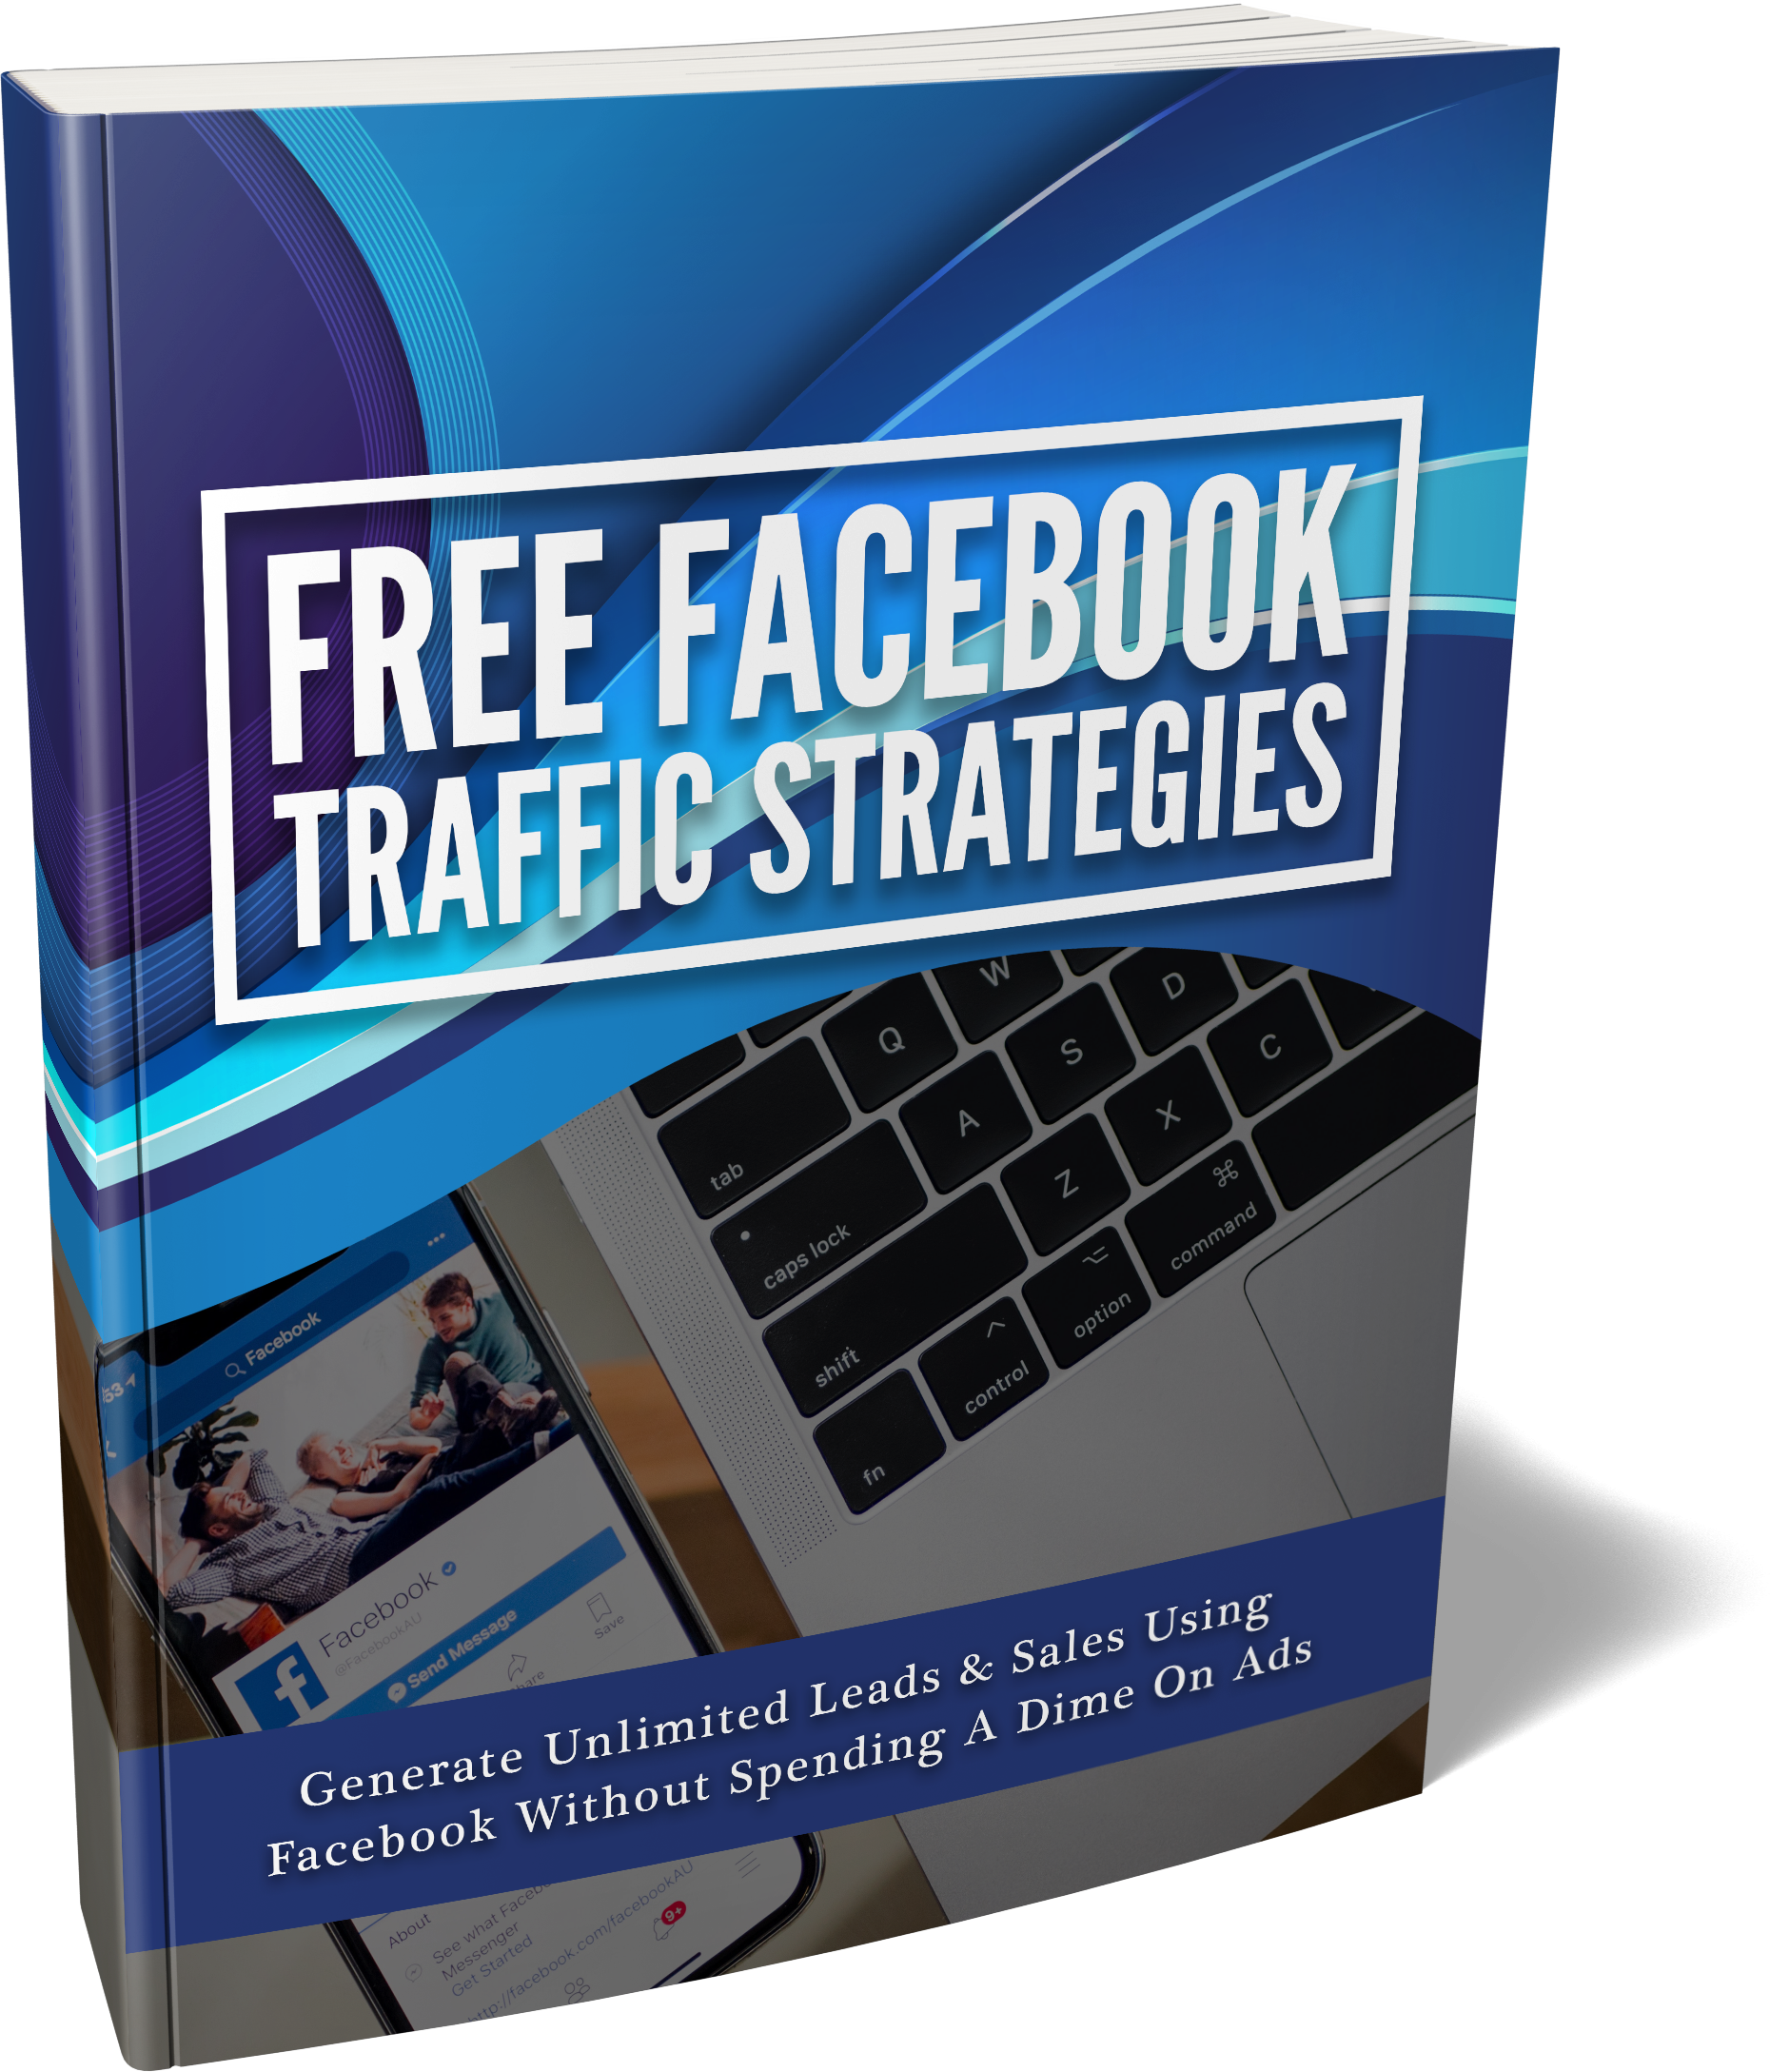 Free Facebook Traffic Strategies image